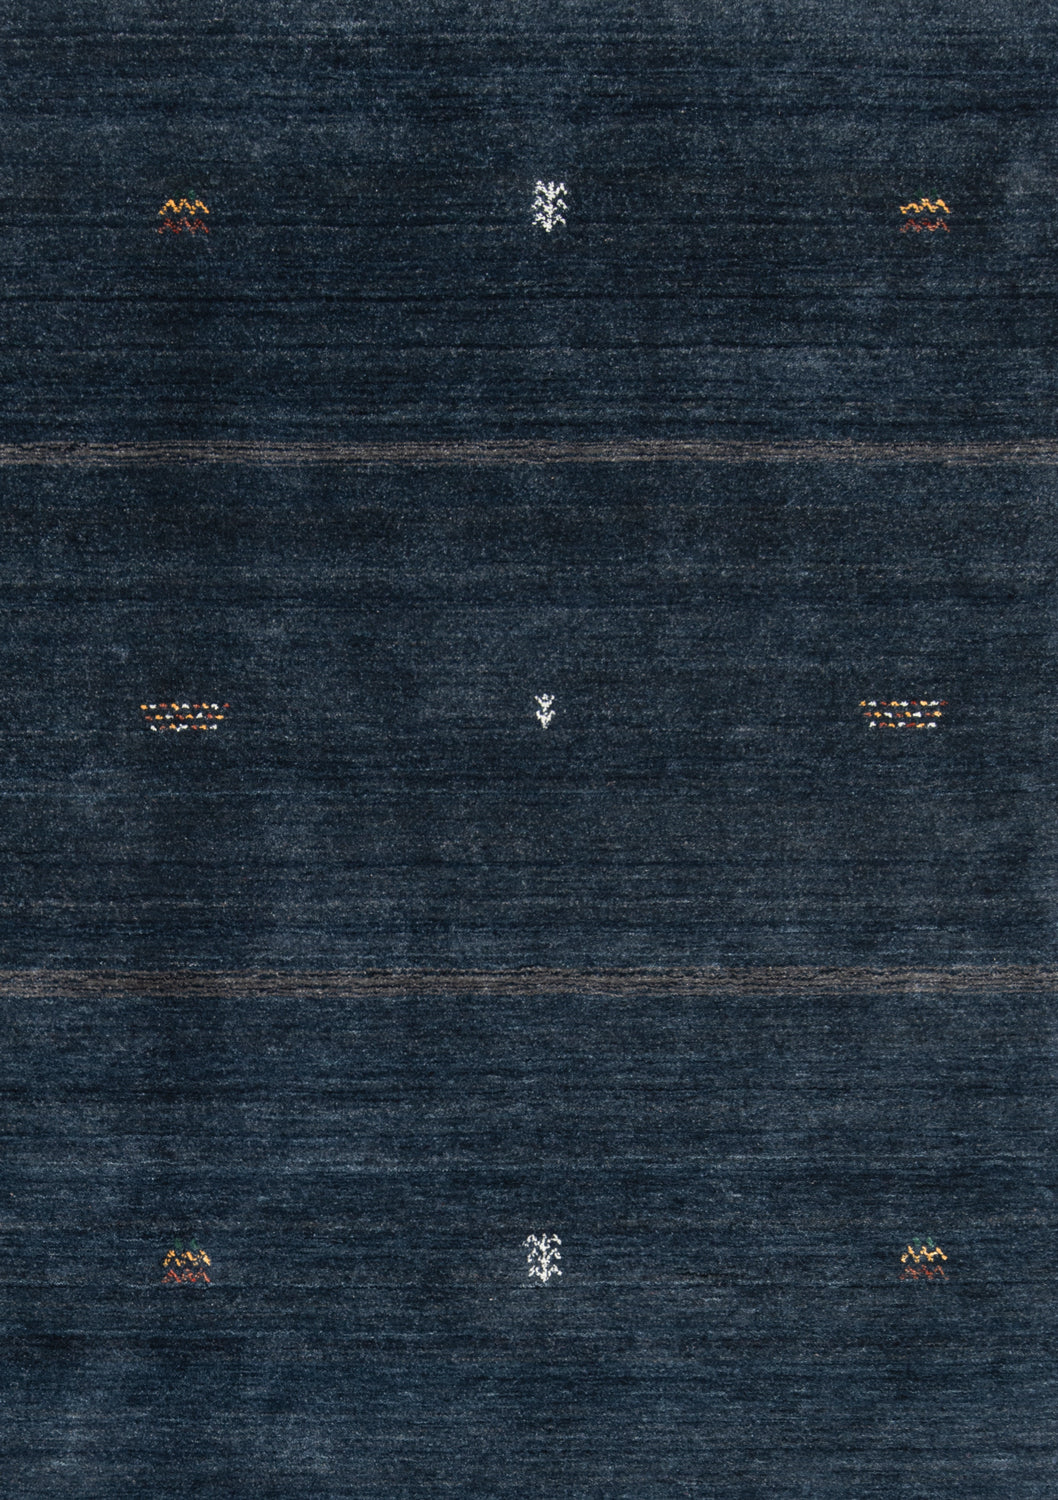 Carpet de tear manual | 240 x 174 cm